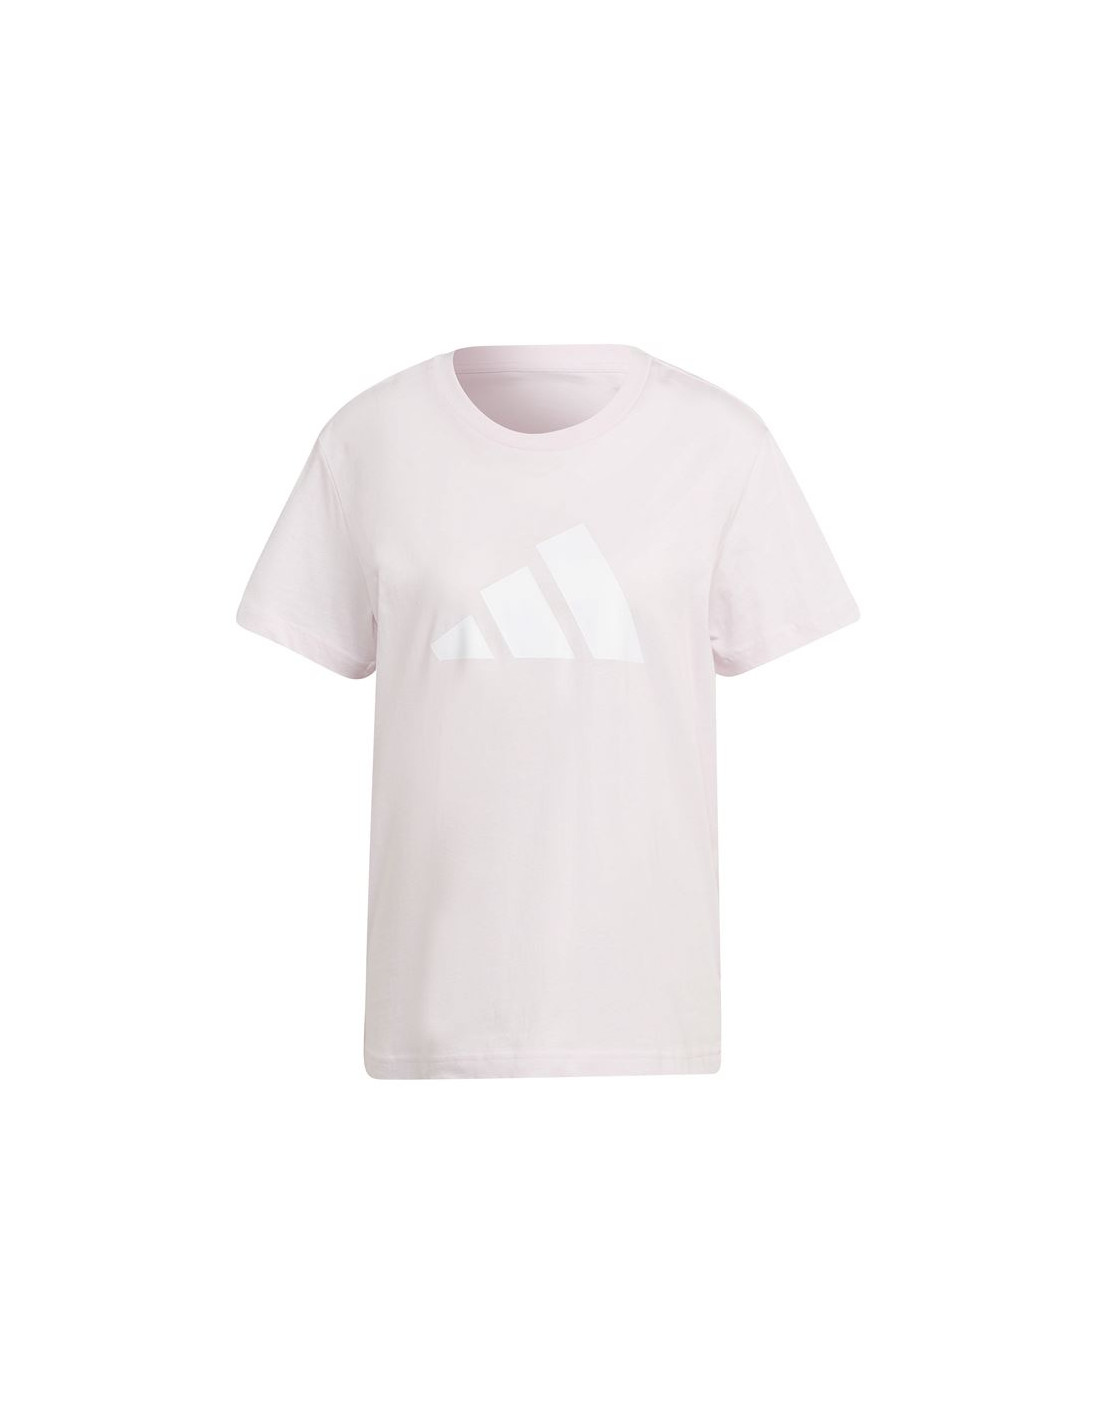 Camiseta adidas future icons w pink